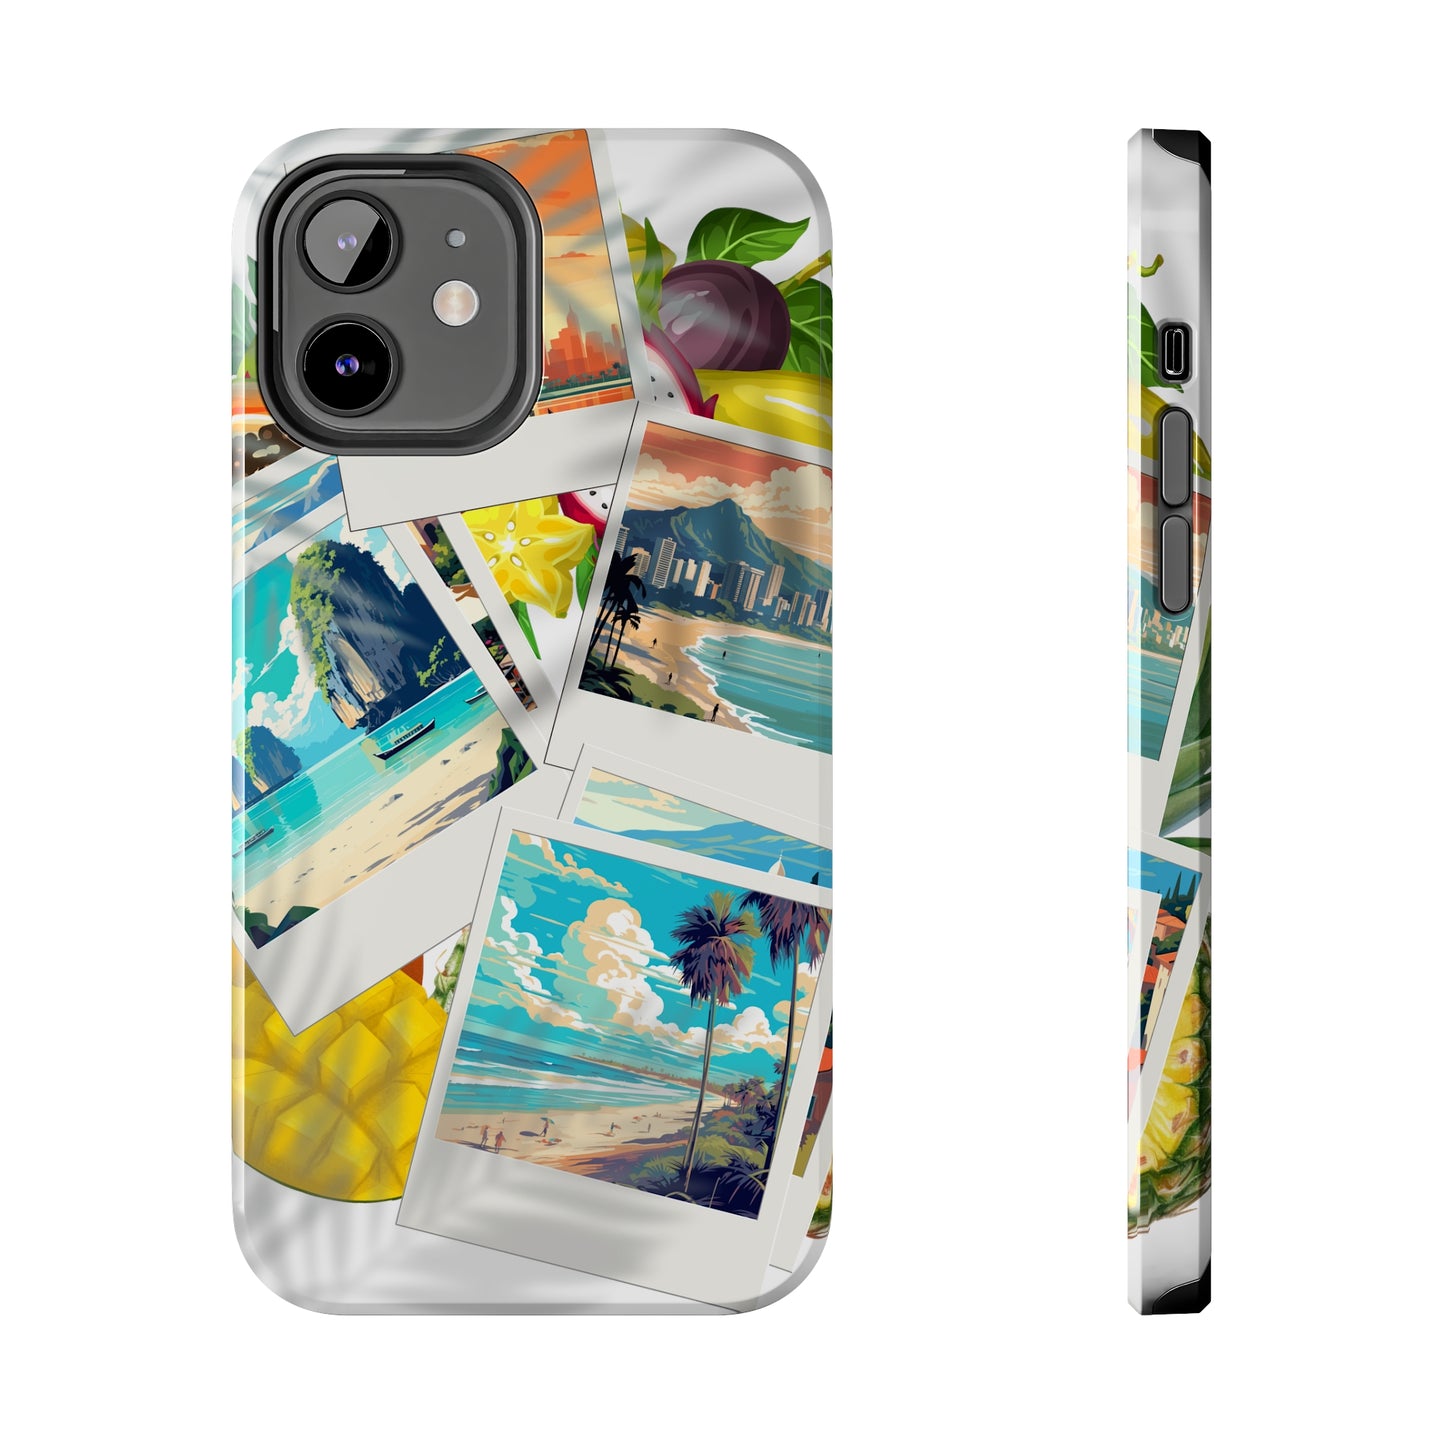 Vacation Travel Custom Printed iPhone case by TheGlassyLass.com